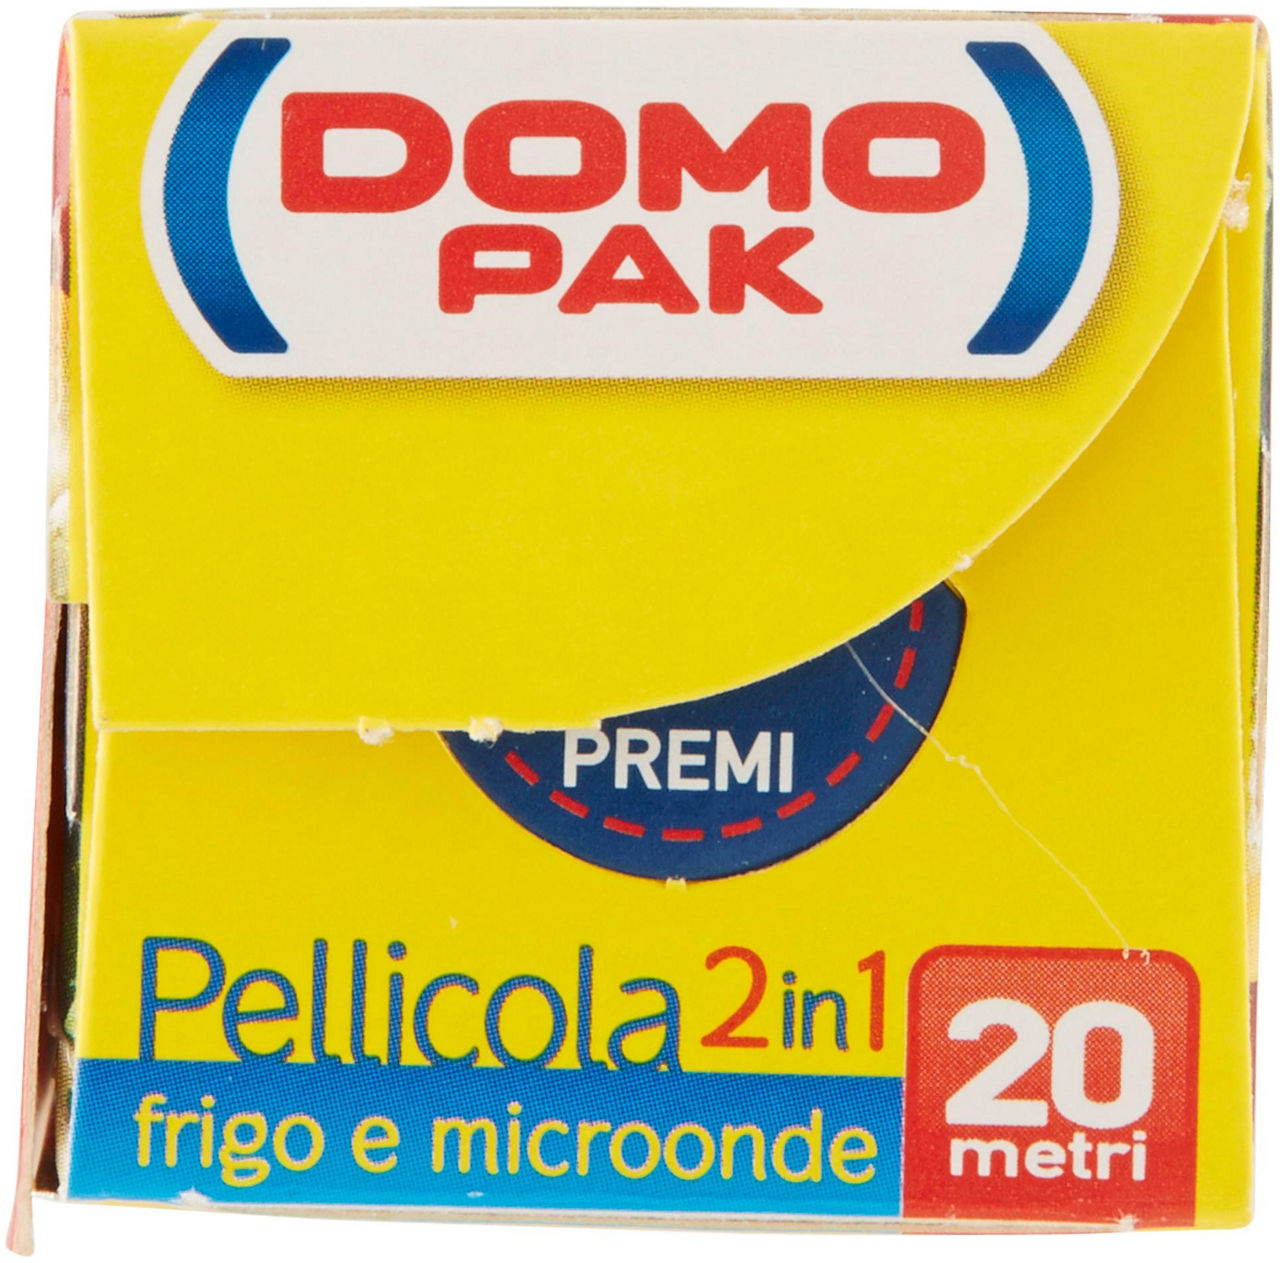 ROTOLO PELLICOLA 2IN1 DOMOPAK FRIGO+MICROON. MT.20 PZ.1 - 3